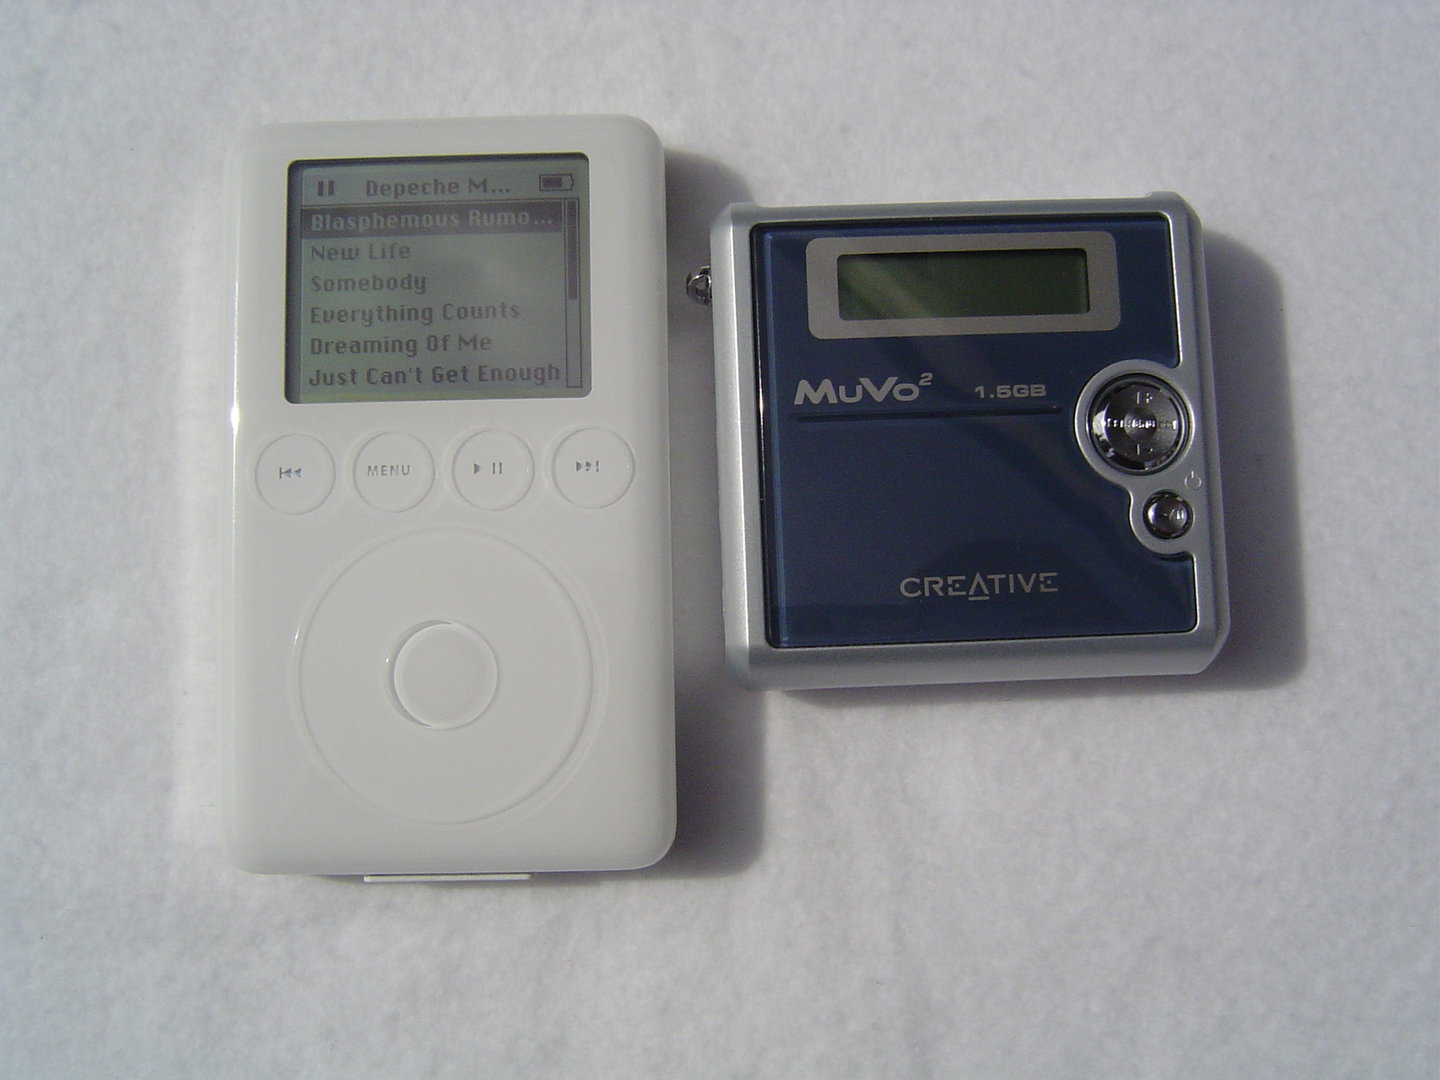 Grössenvergleich iPod vs MuVo²